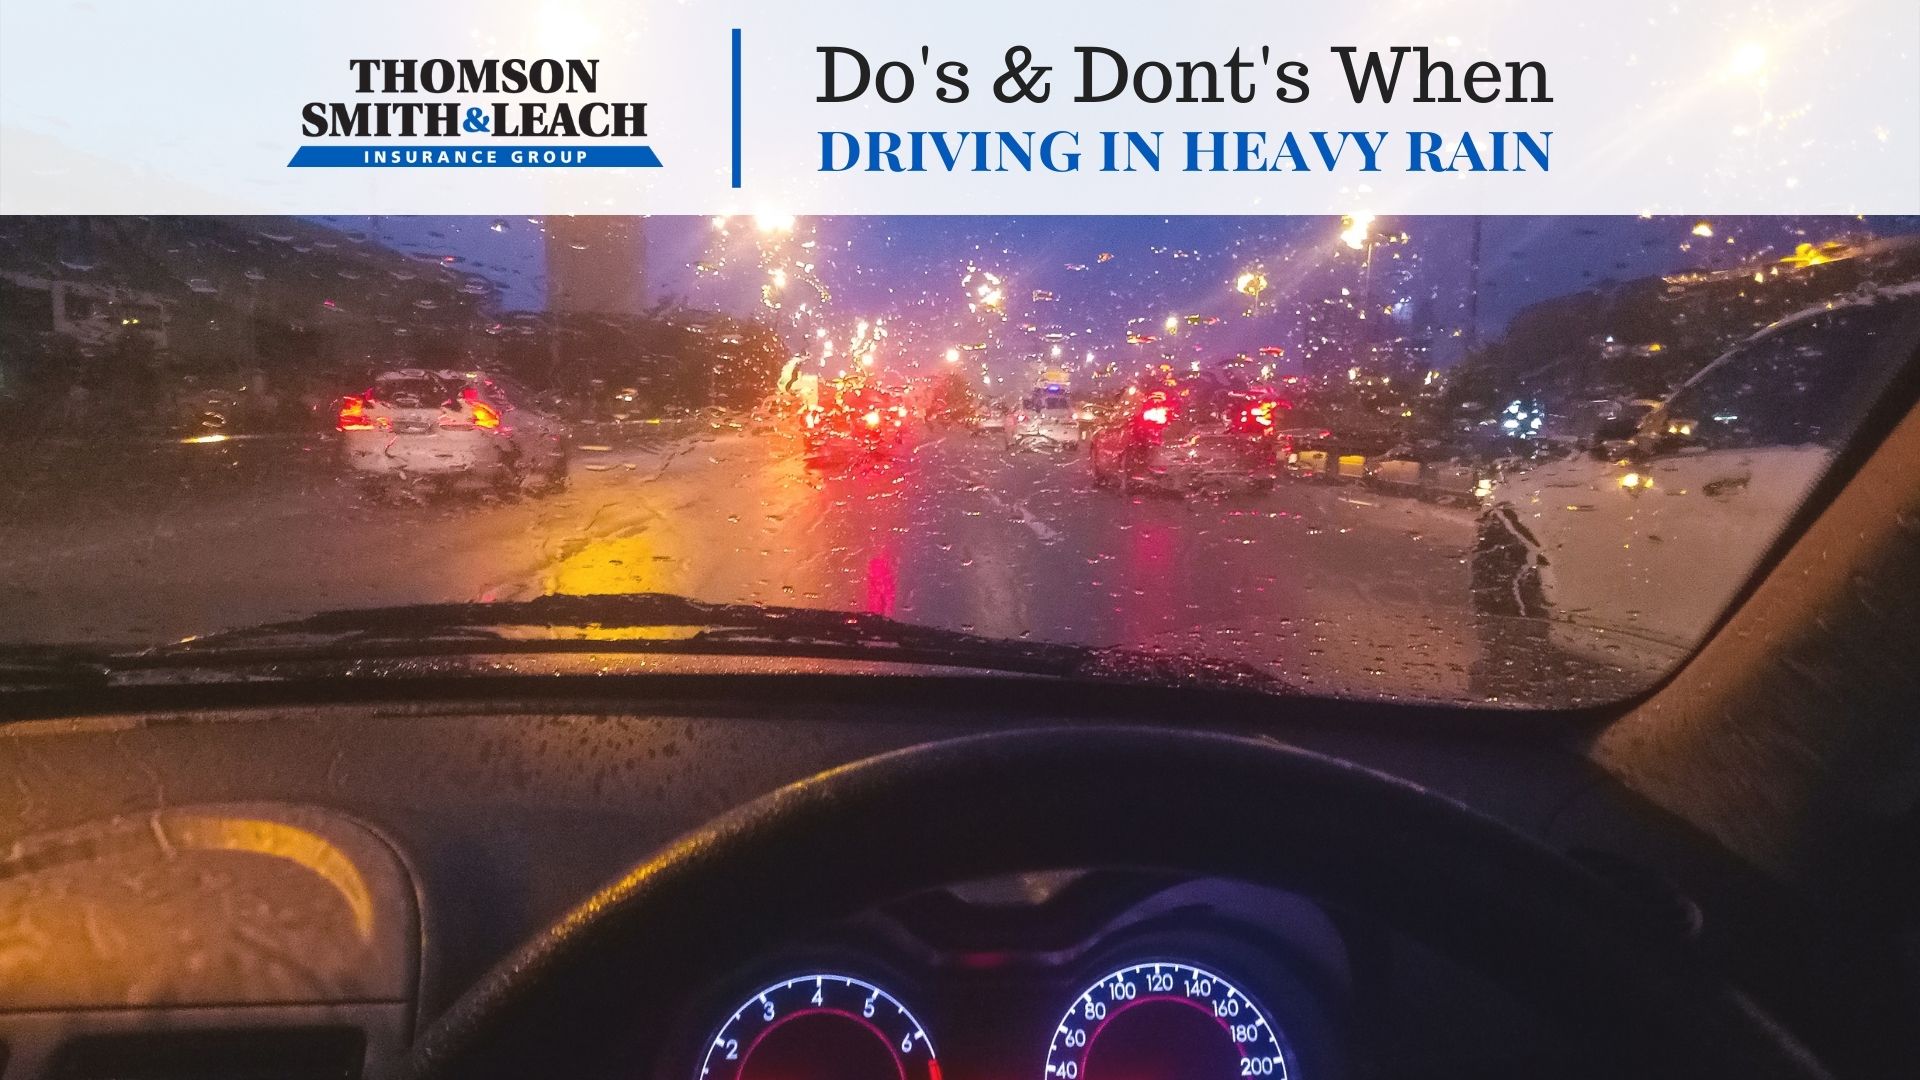 car windshield during heavy rain at night